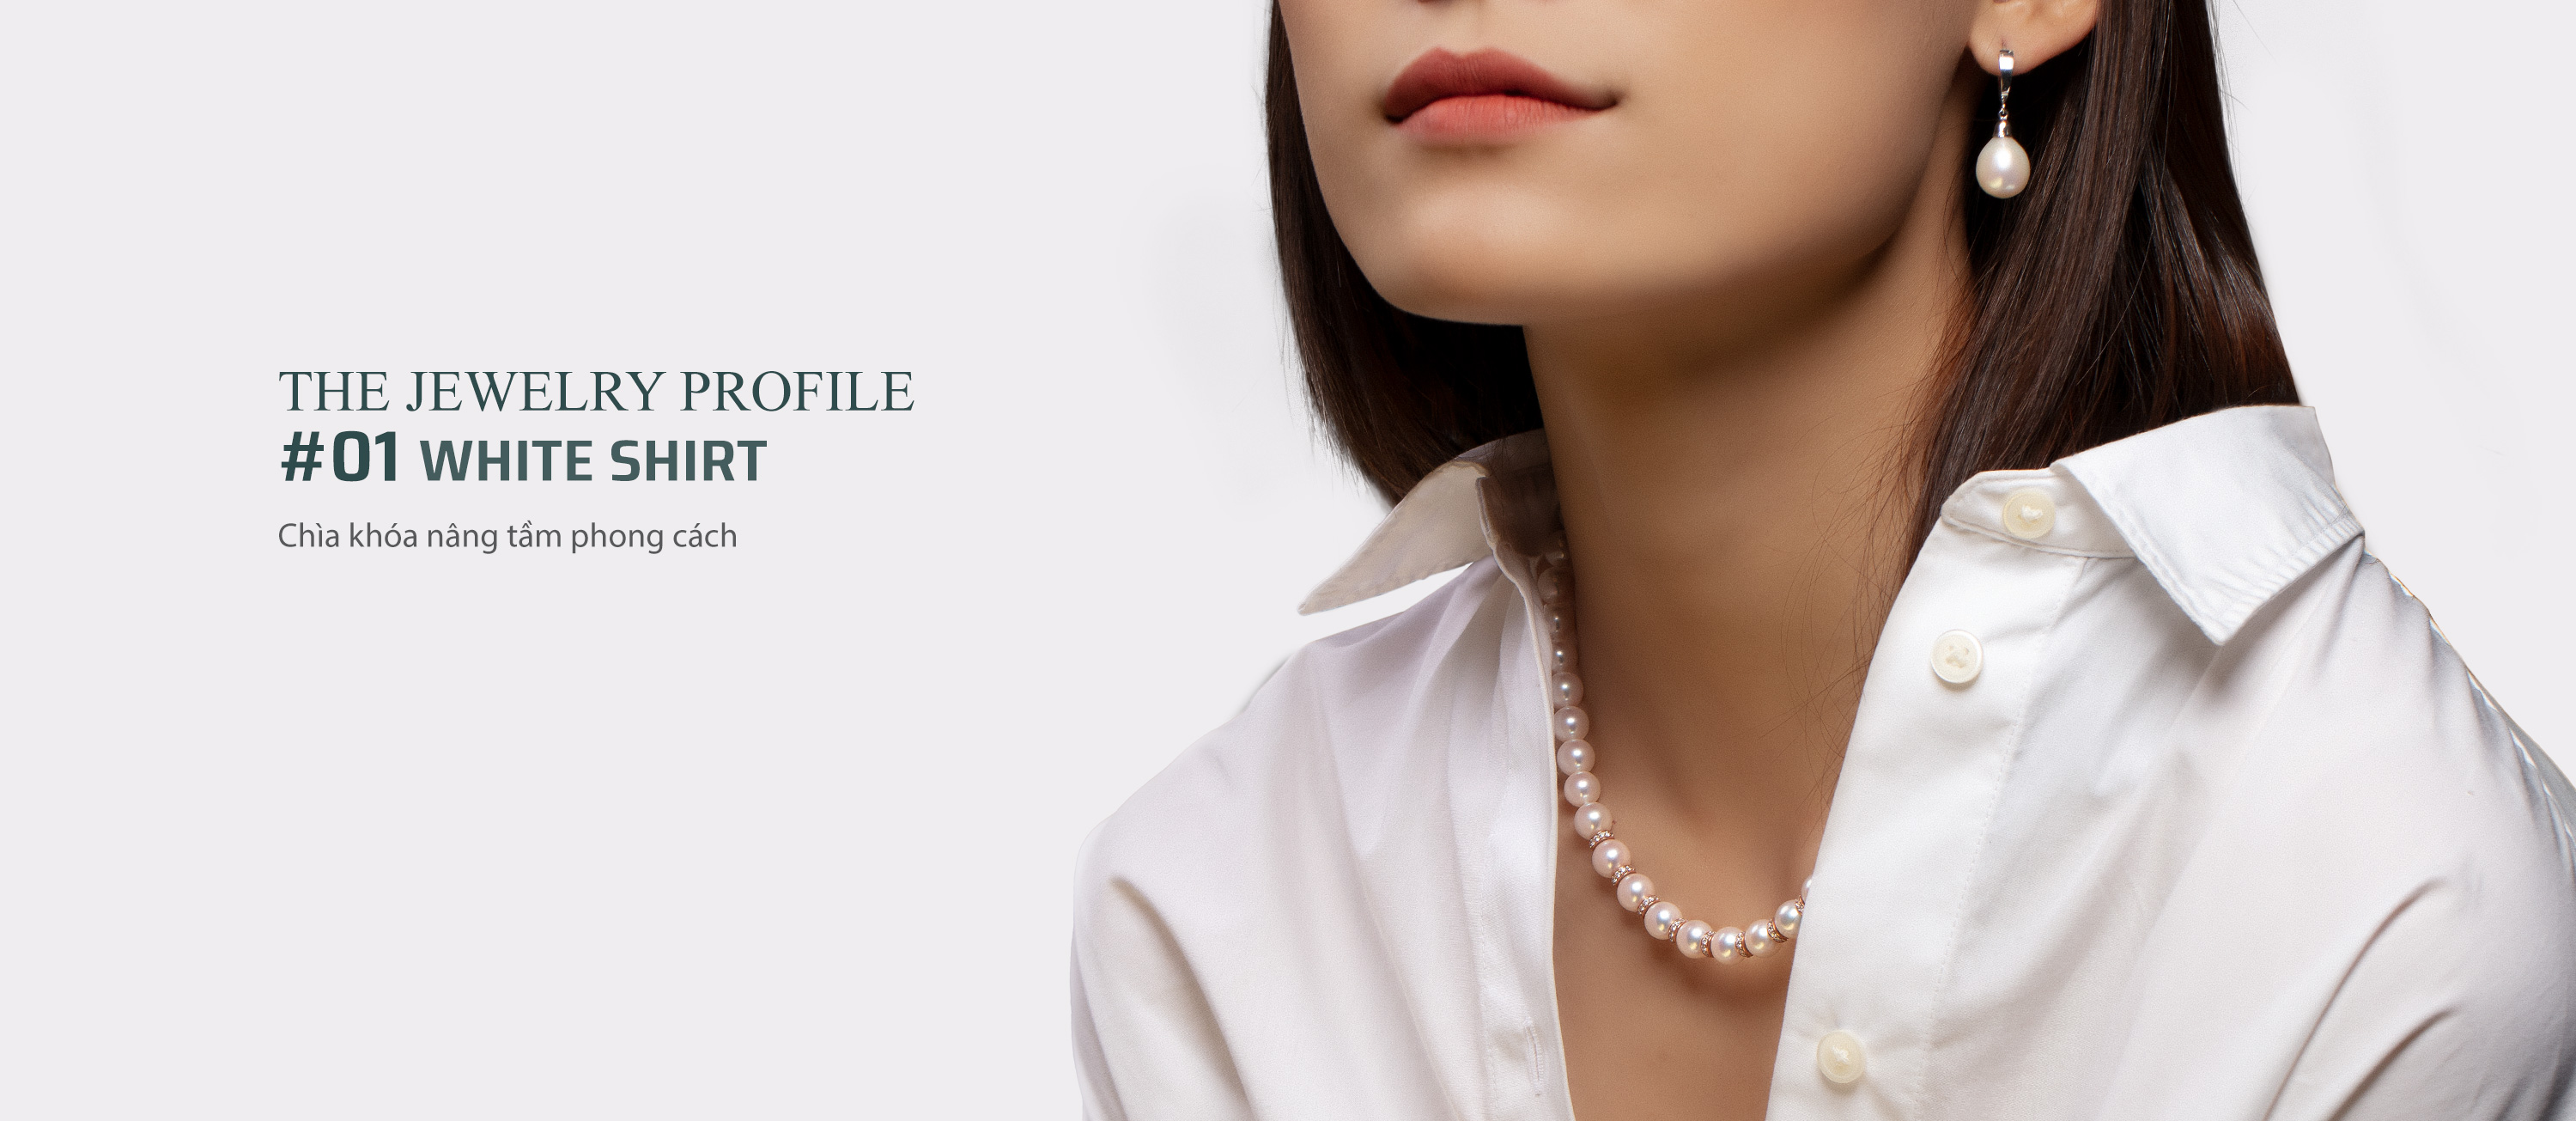 The Jewelry Profile #01: White Shirt